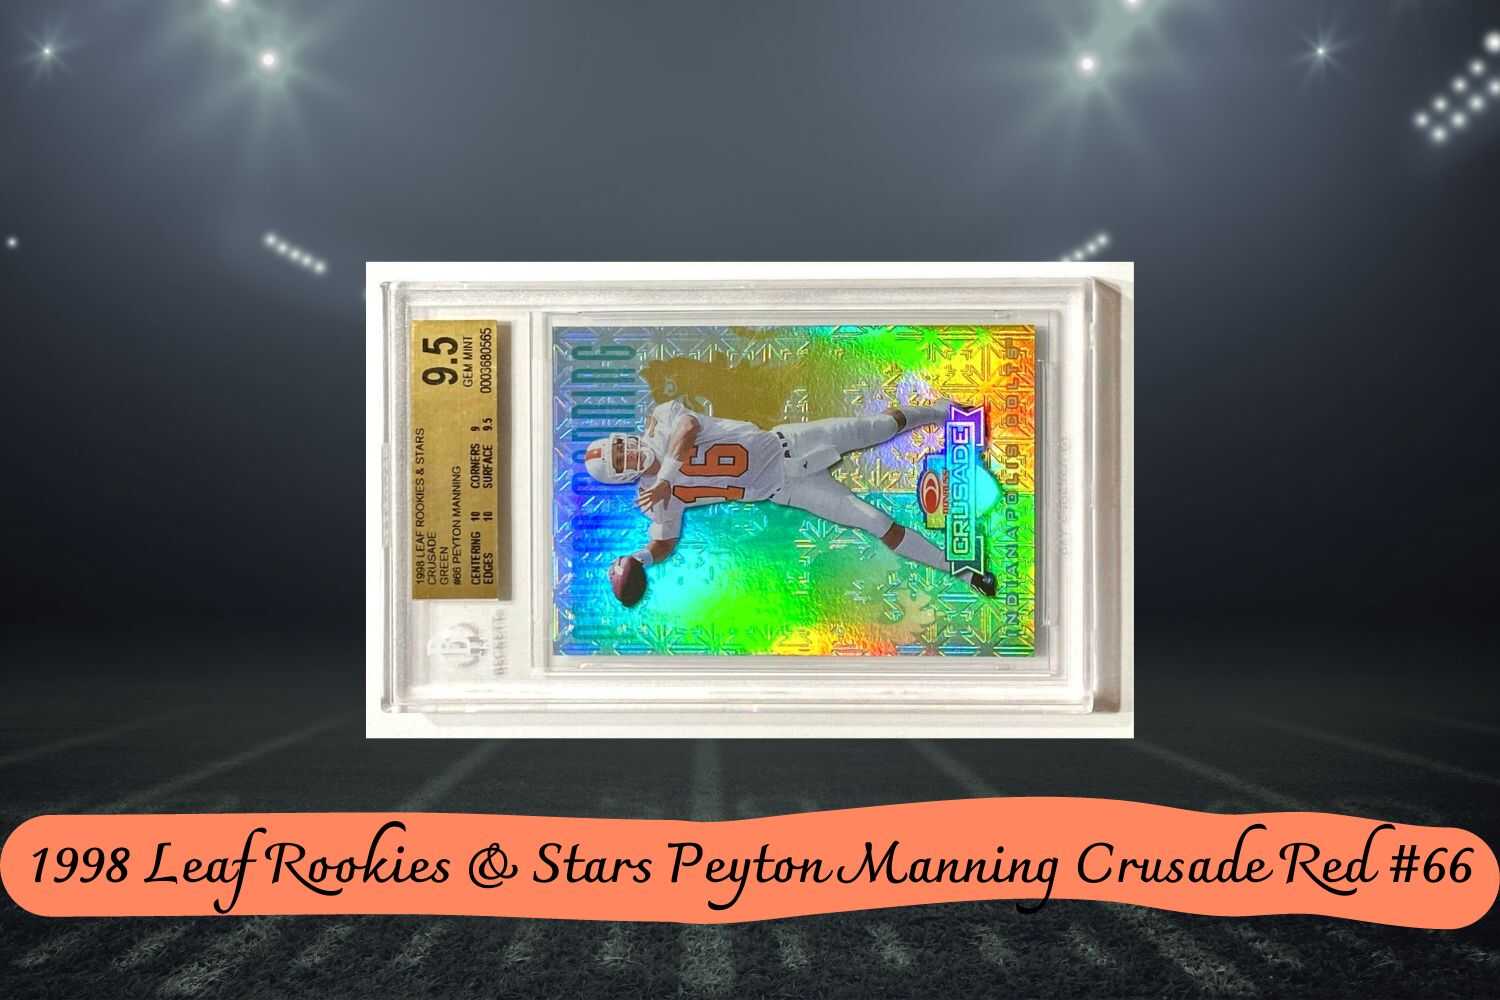 #13 1998 Leaf Rookies & Stars Peyton Manning Crusade Red #66 - Estimate value: $5,500